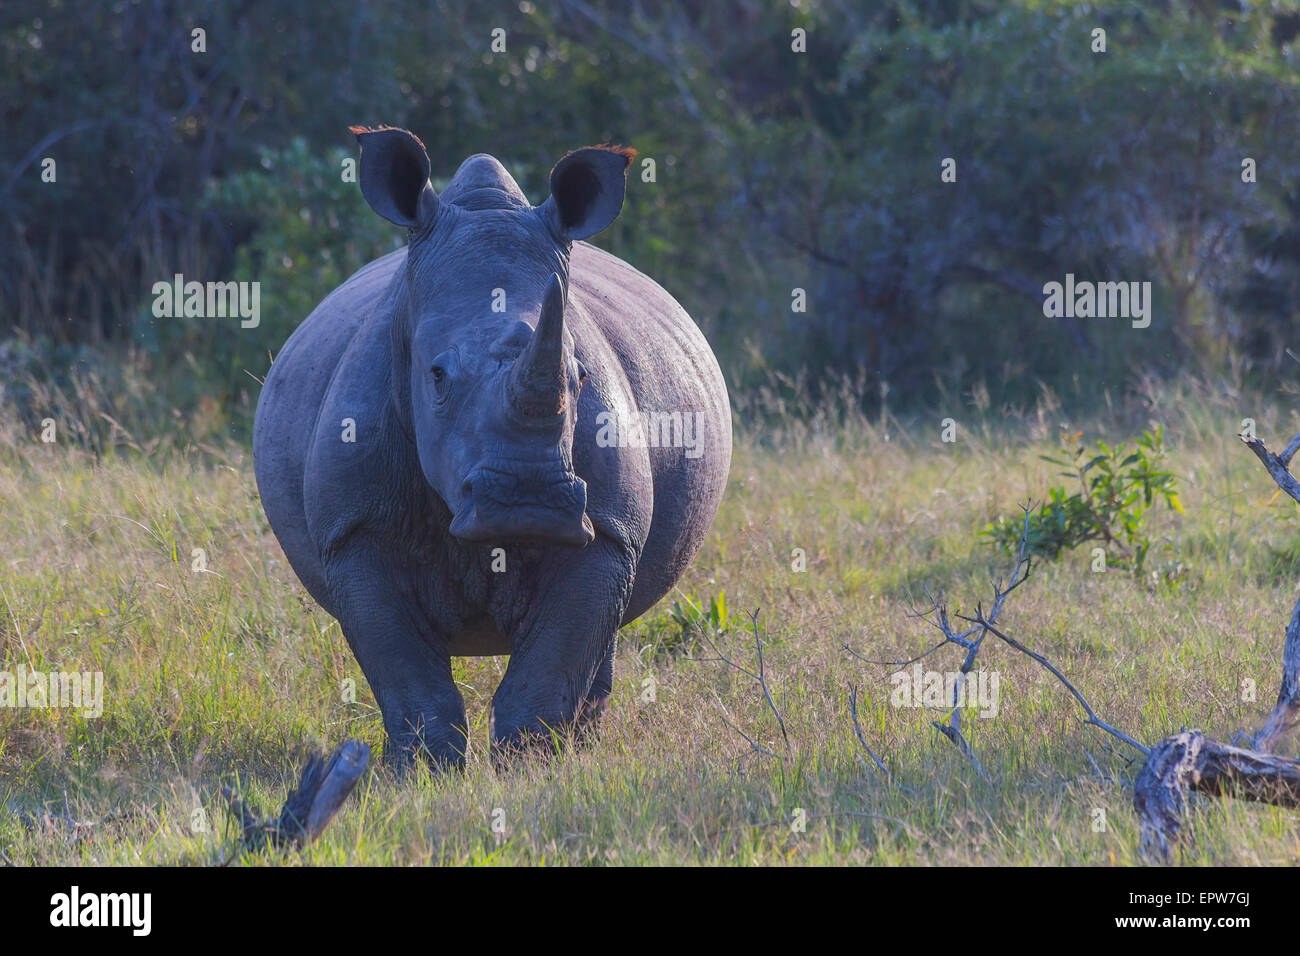 Alert rhino in the bush in the early morning light Stock Photo